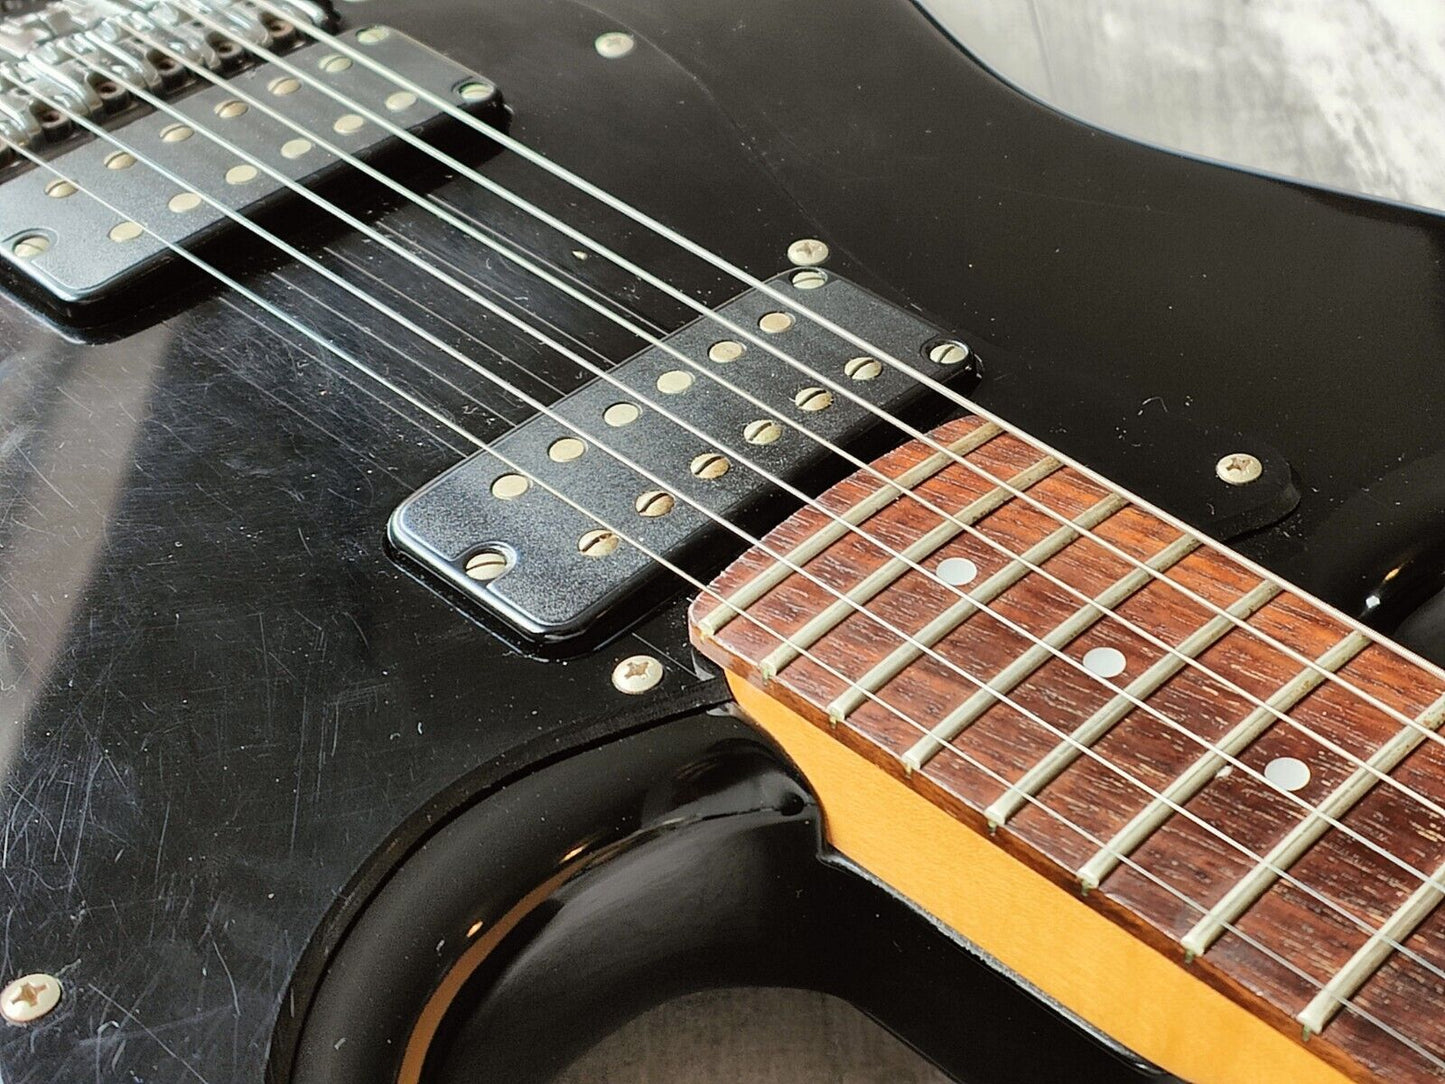 1986 Fender Japan "E Series" ST755 Comtemporary HH Stratocaster (Black)